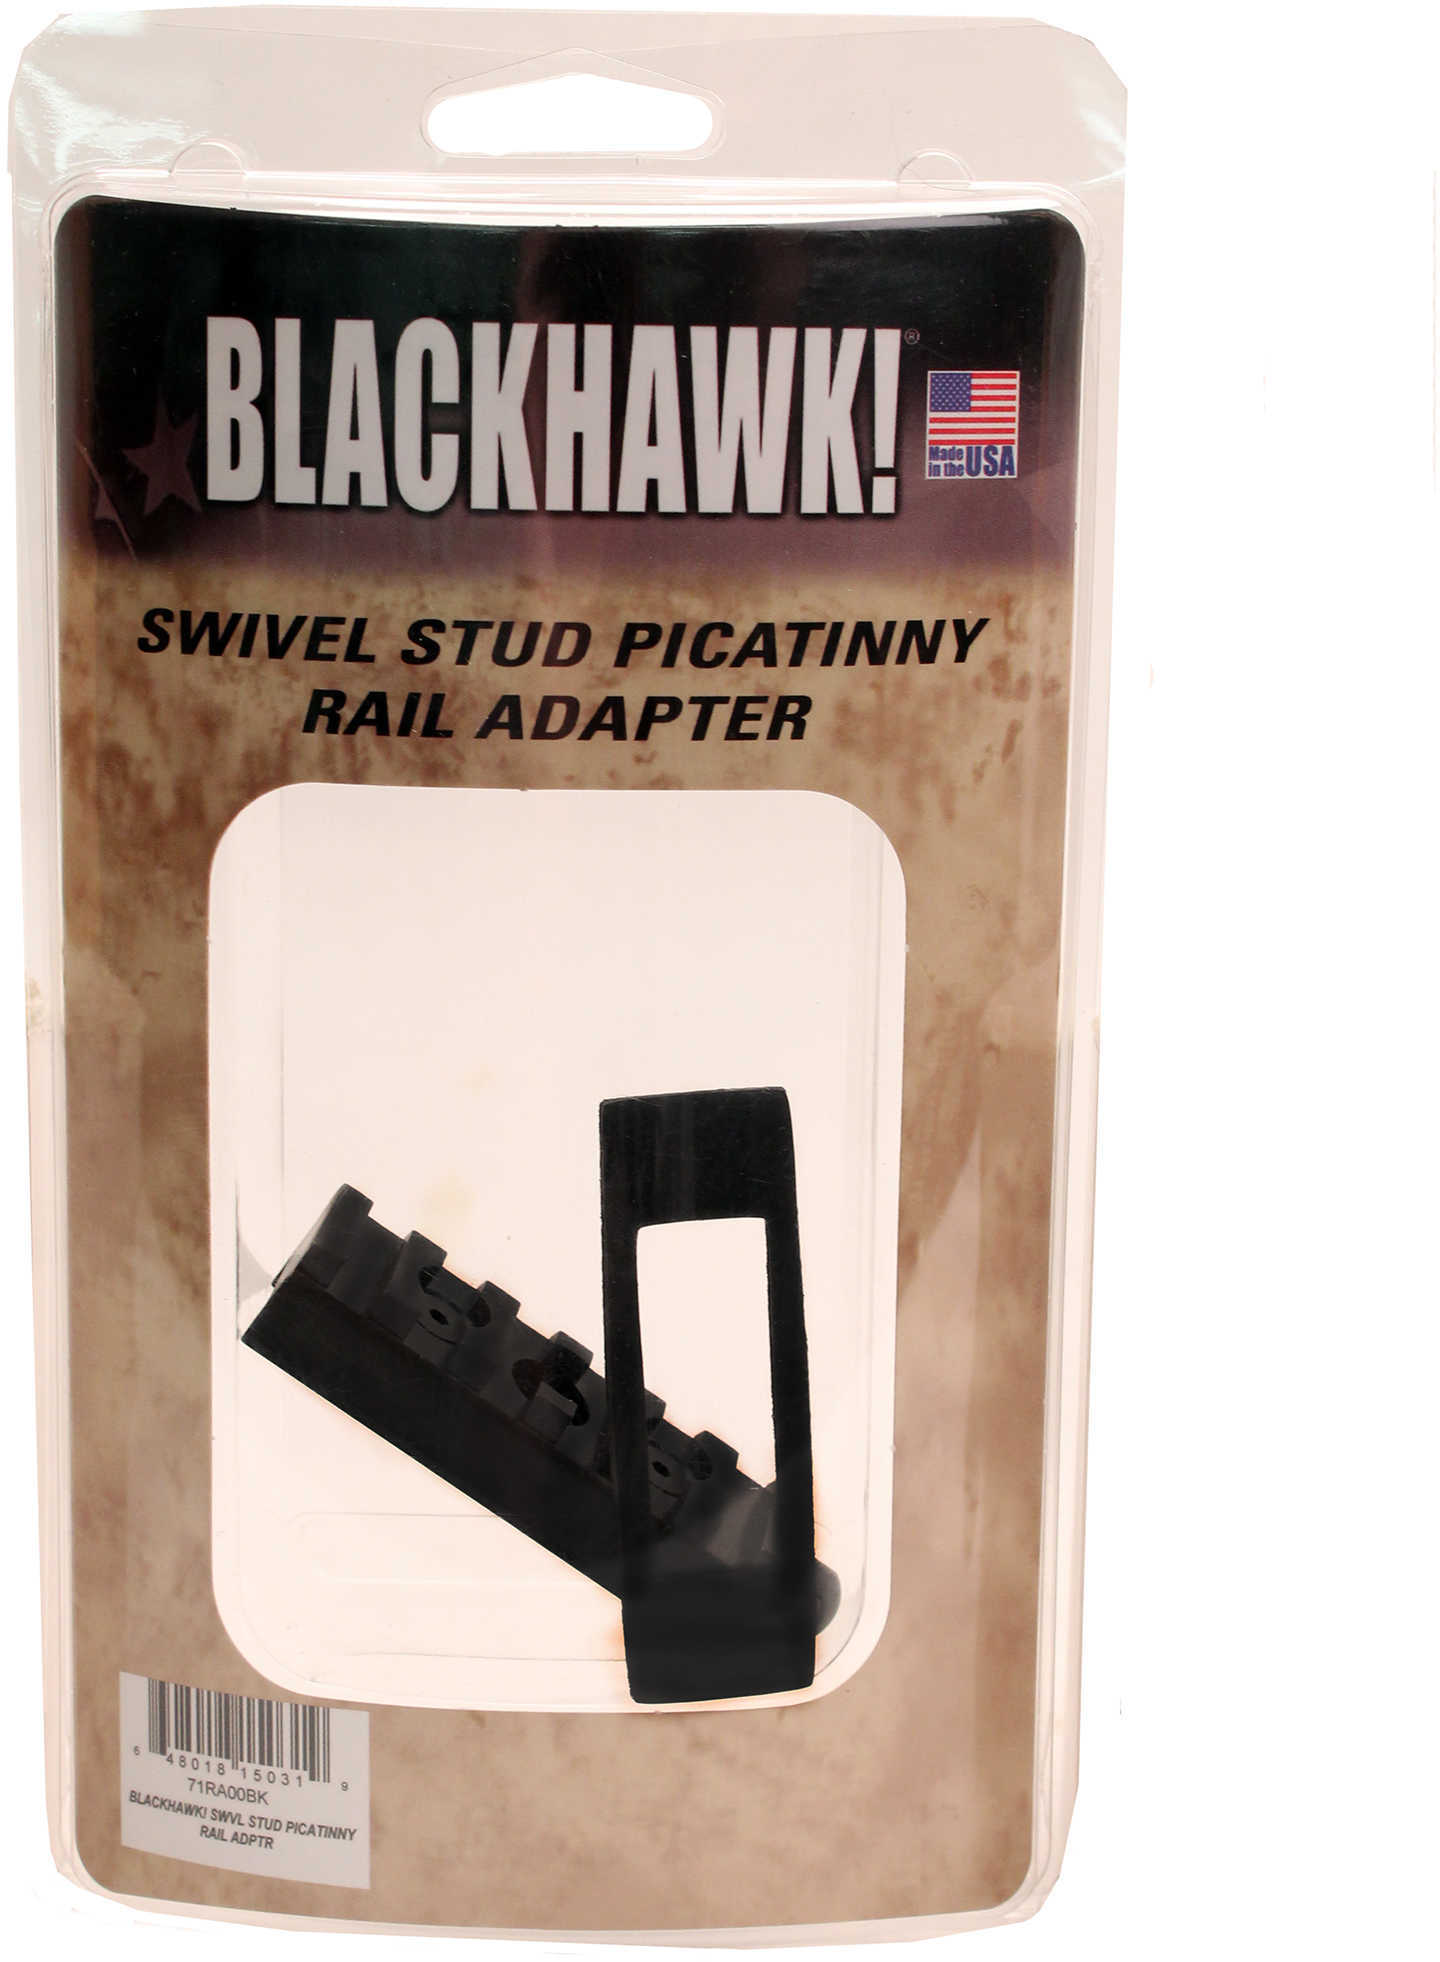 Blackhawk Swivel Stud To Picatinny Rail Adapter